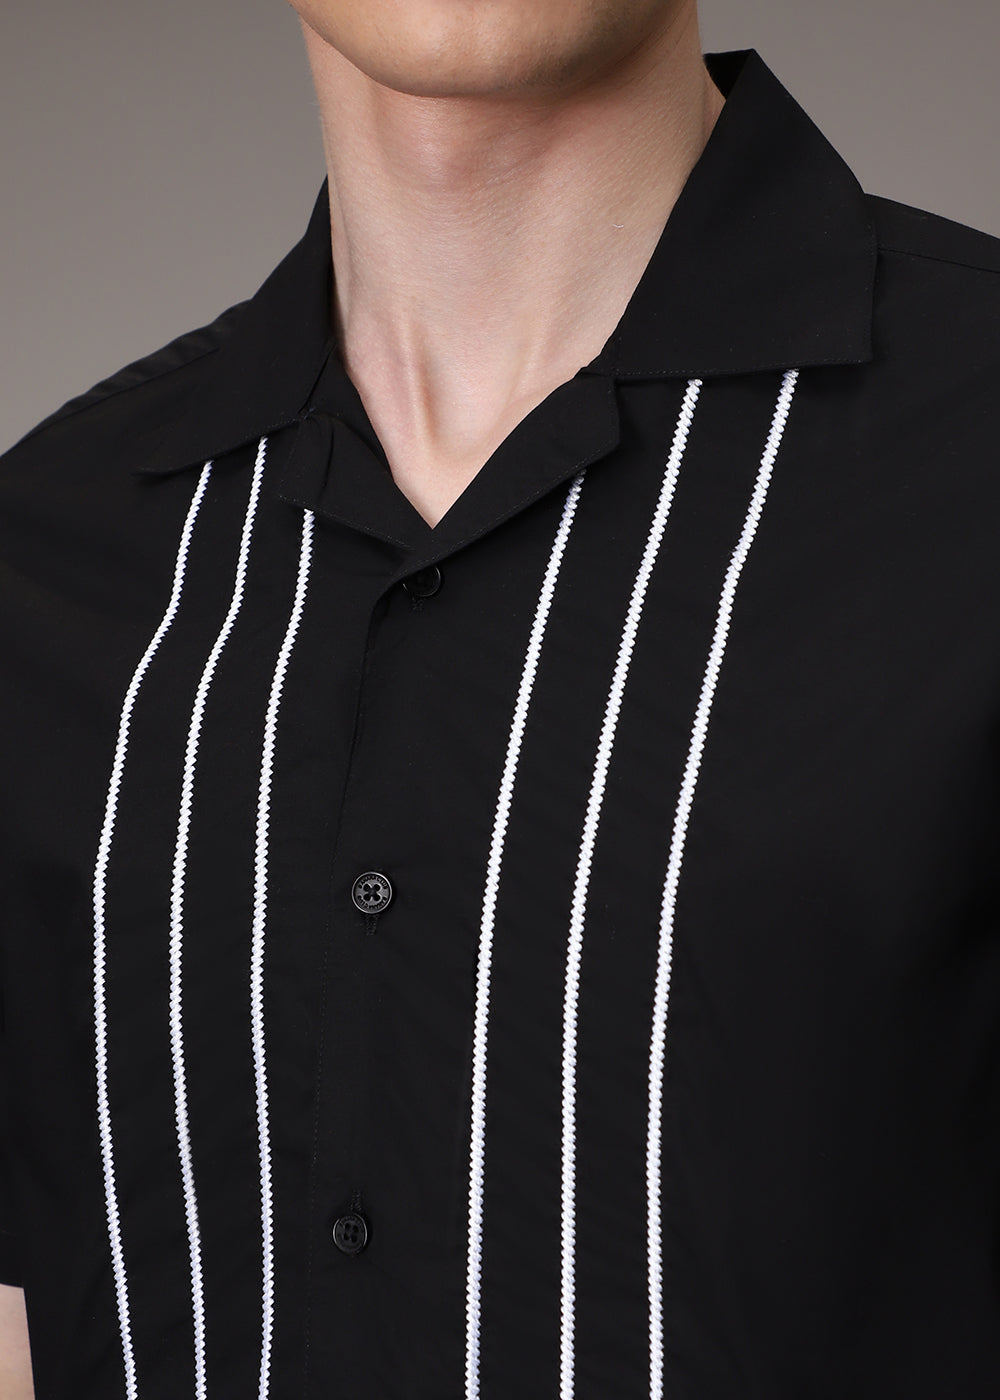 Black Line Embroidery Shirt